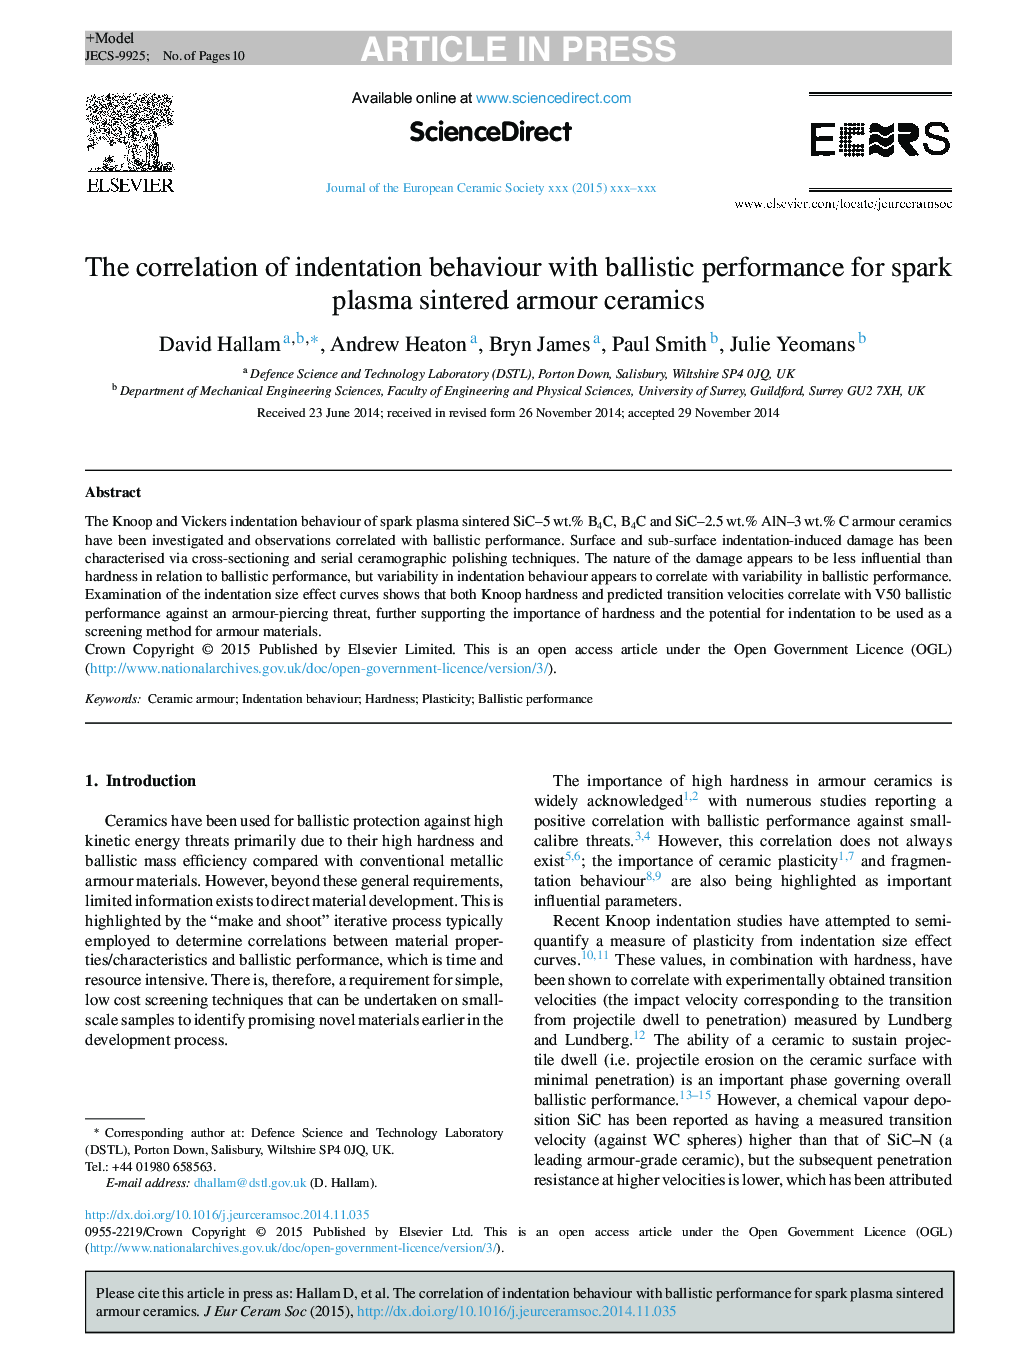 The correlation of indentation behaviour with ballistic performance for spark plasma sintered armour ceramics